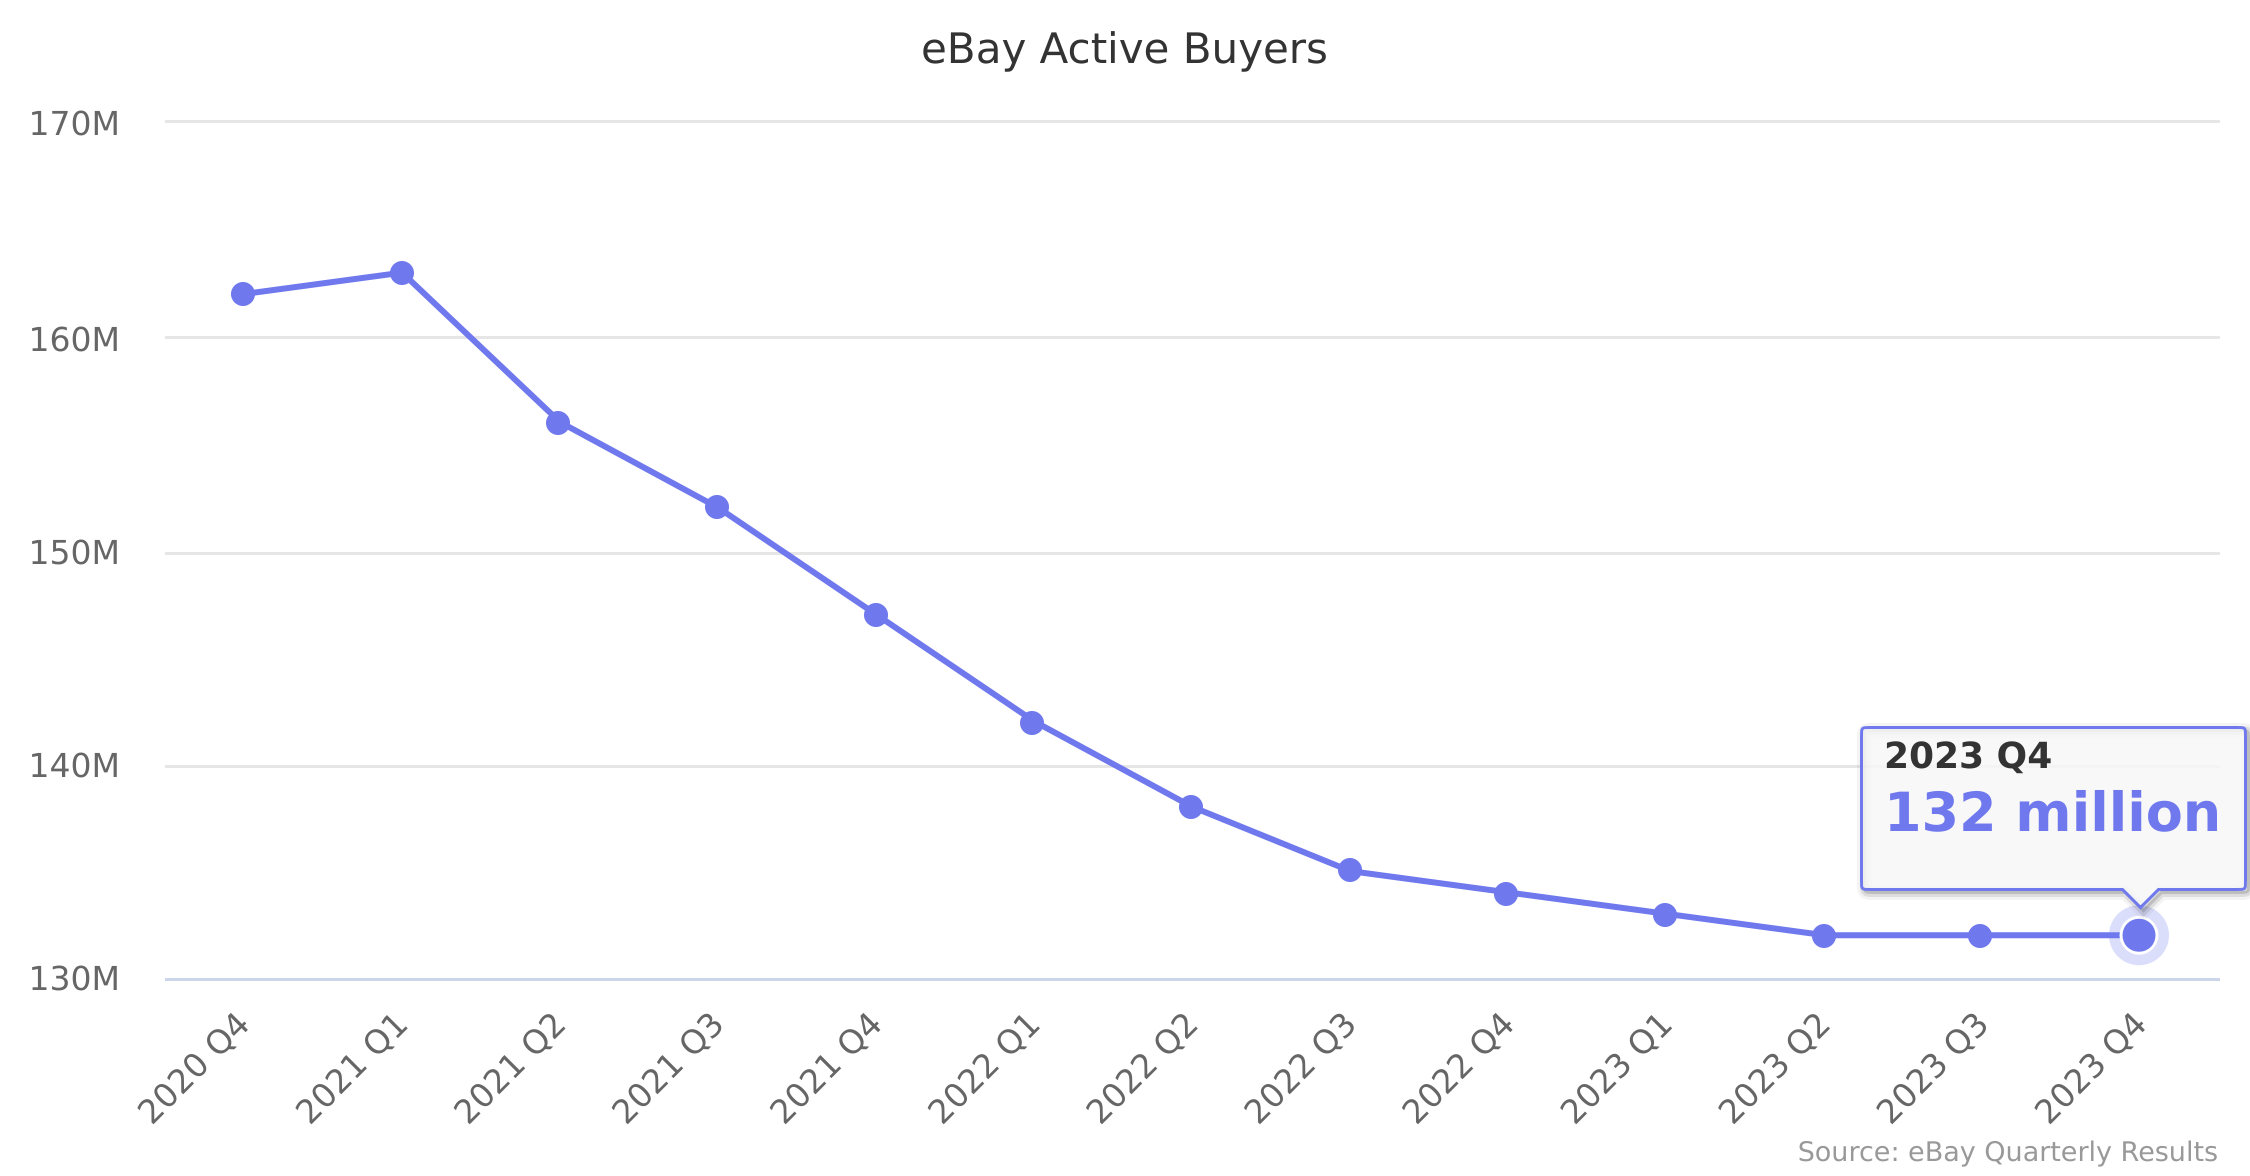 eBay Active Buyers